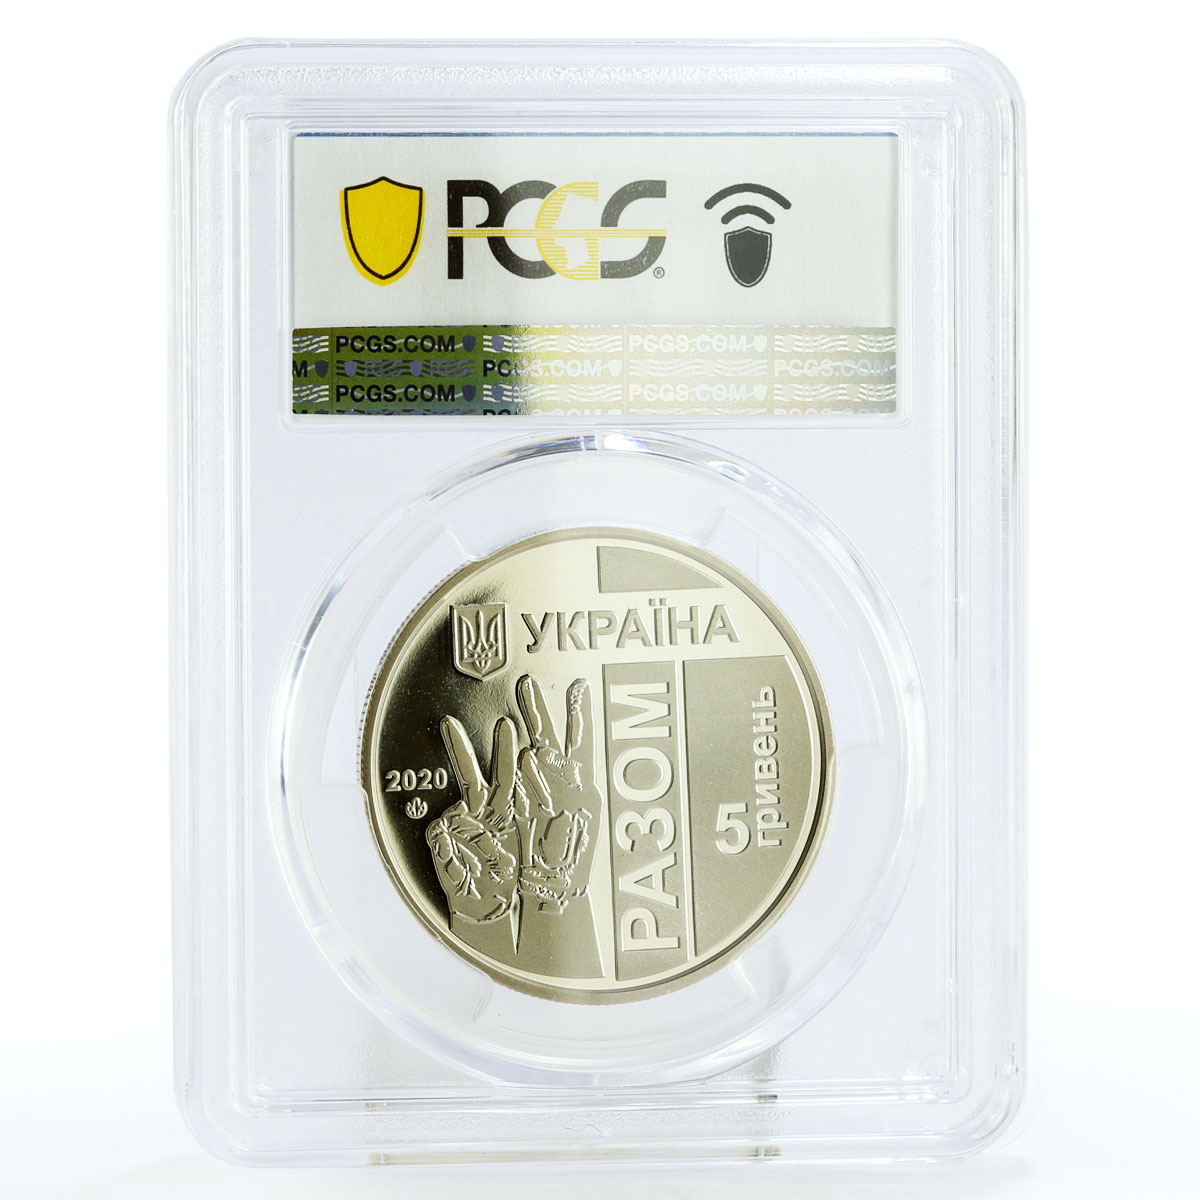 Ukraine 5 hryvnias Frontline Doctor Soldier MS69 PCGS nickel coin 2020